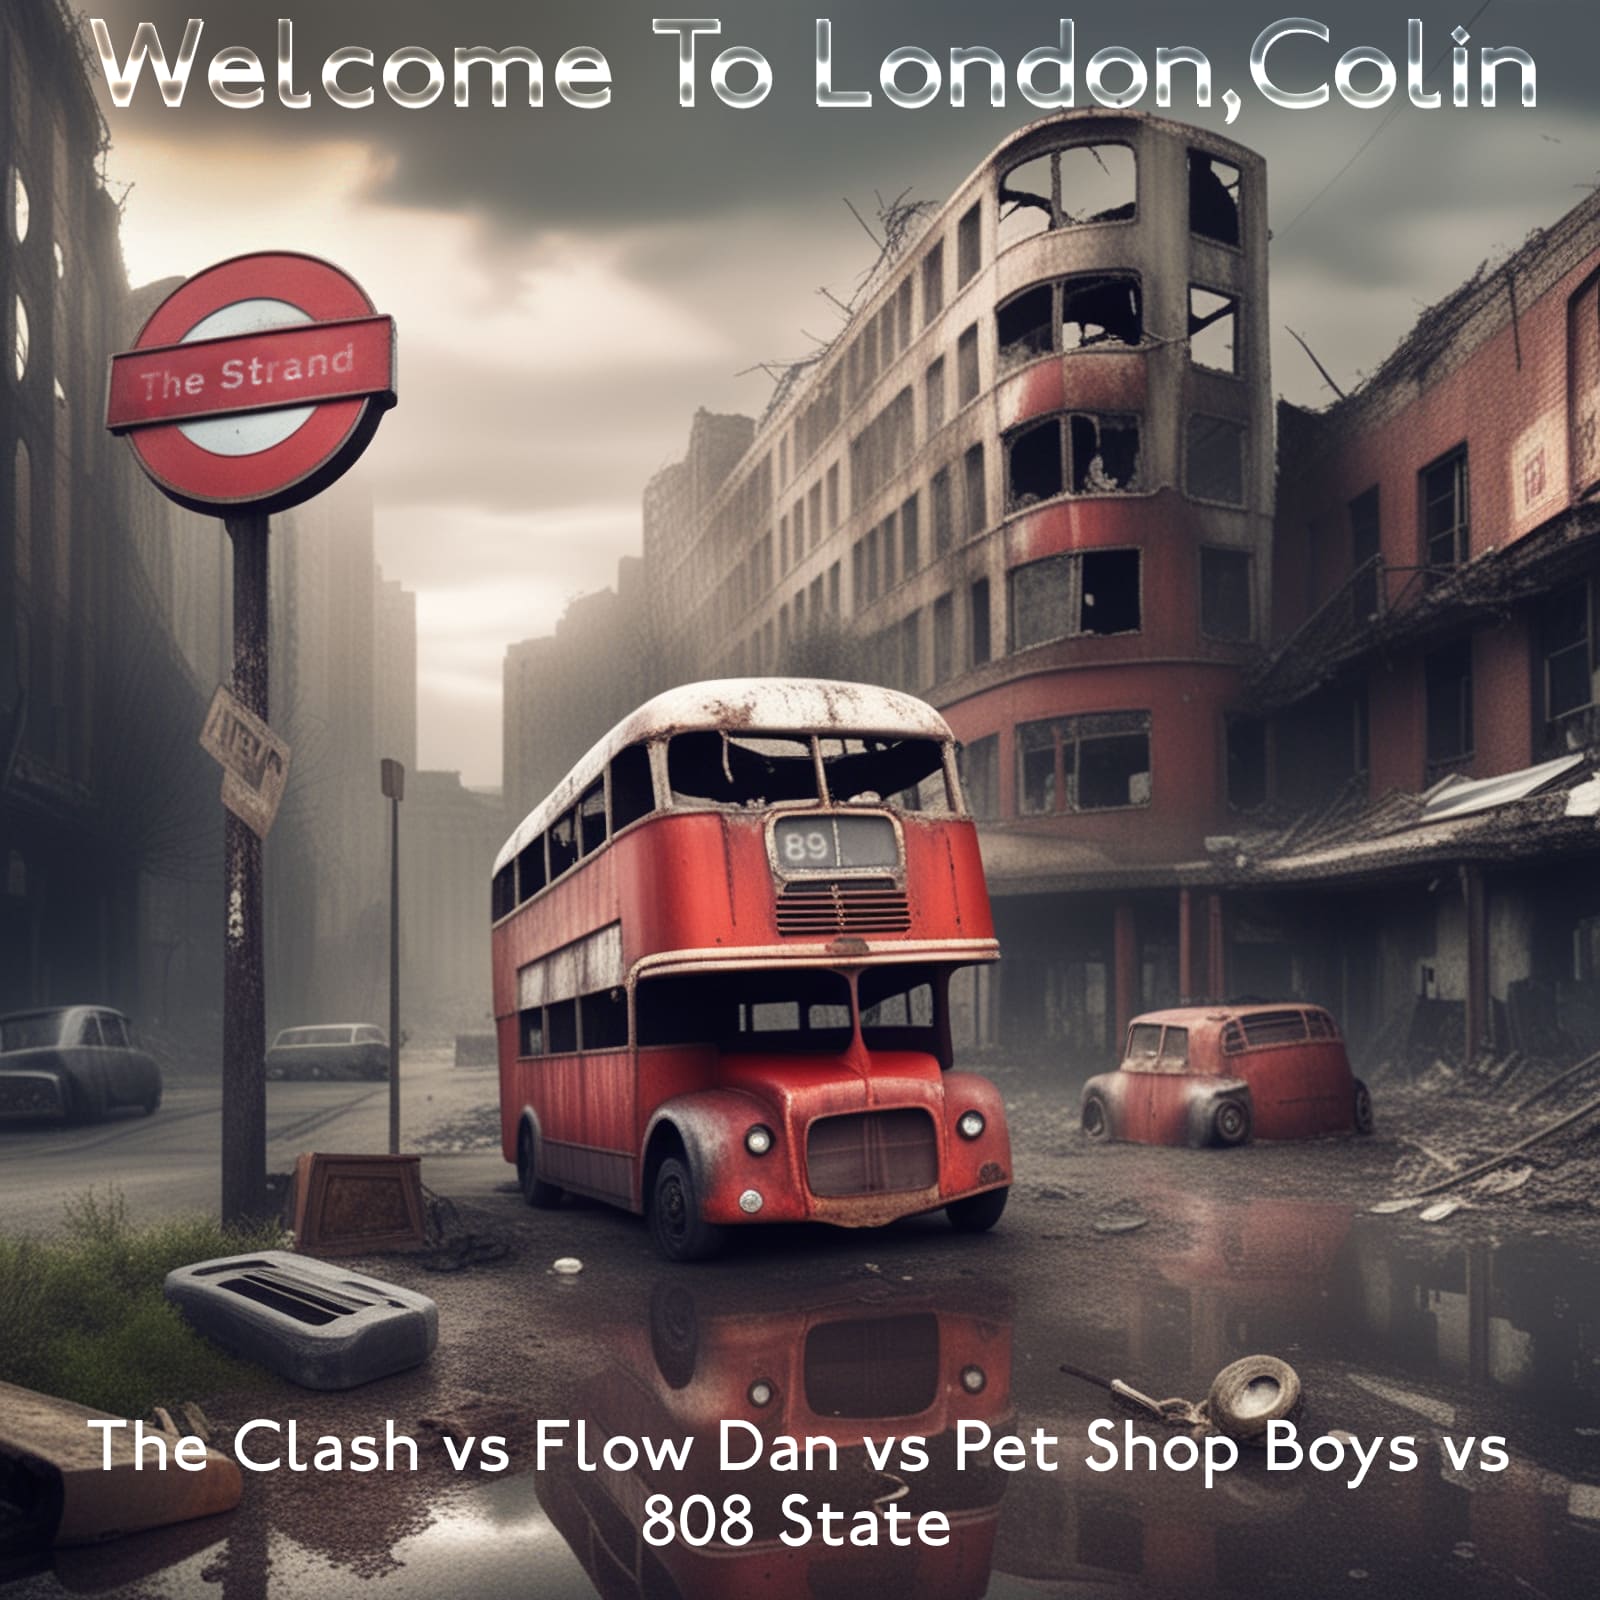 Welcome To London, Colin (The Clash vs Flowdan vs Pet Shop Boys vs 808 State) mashup cover